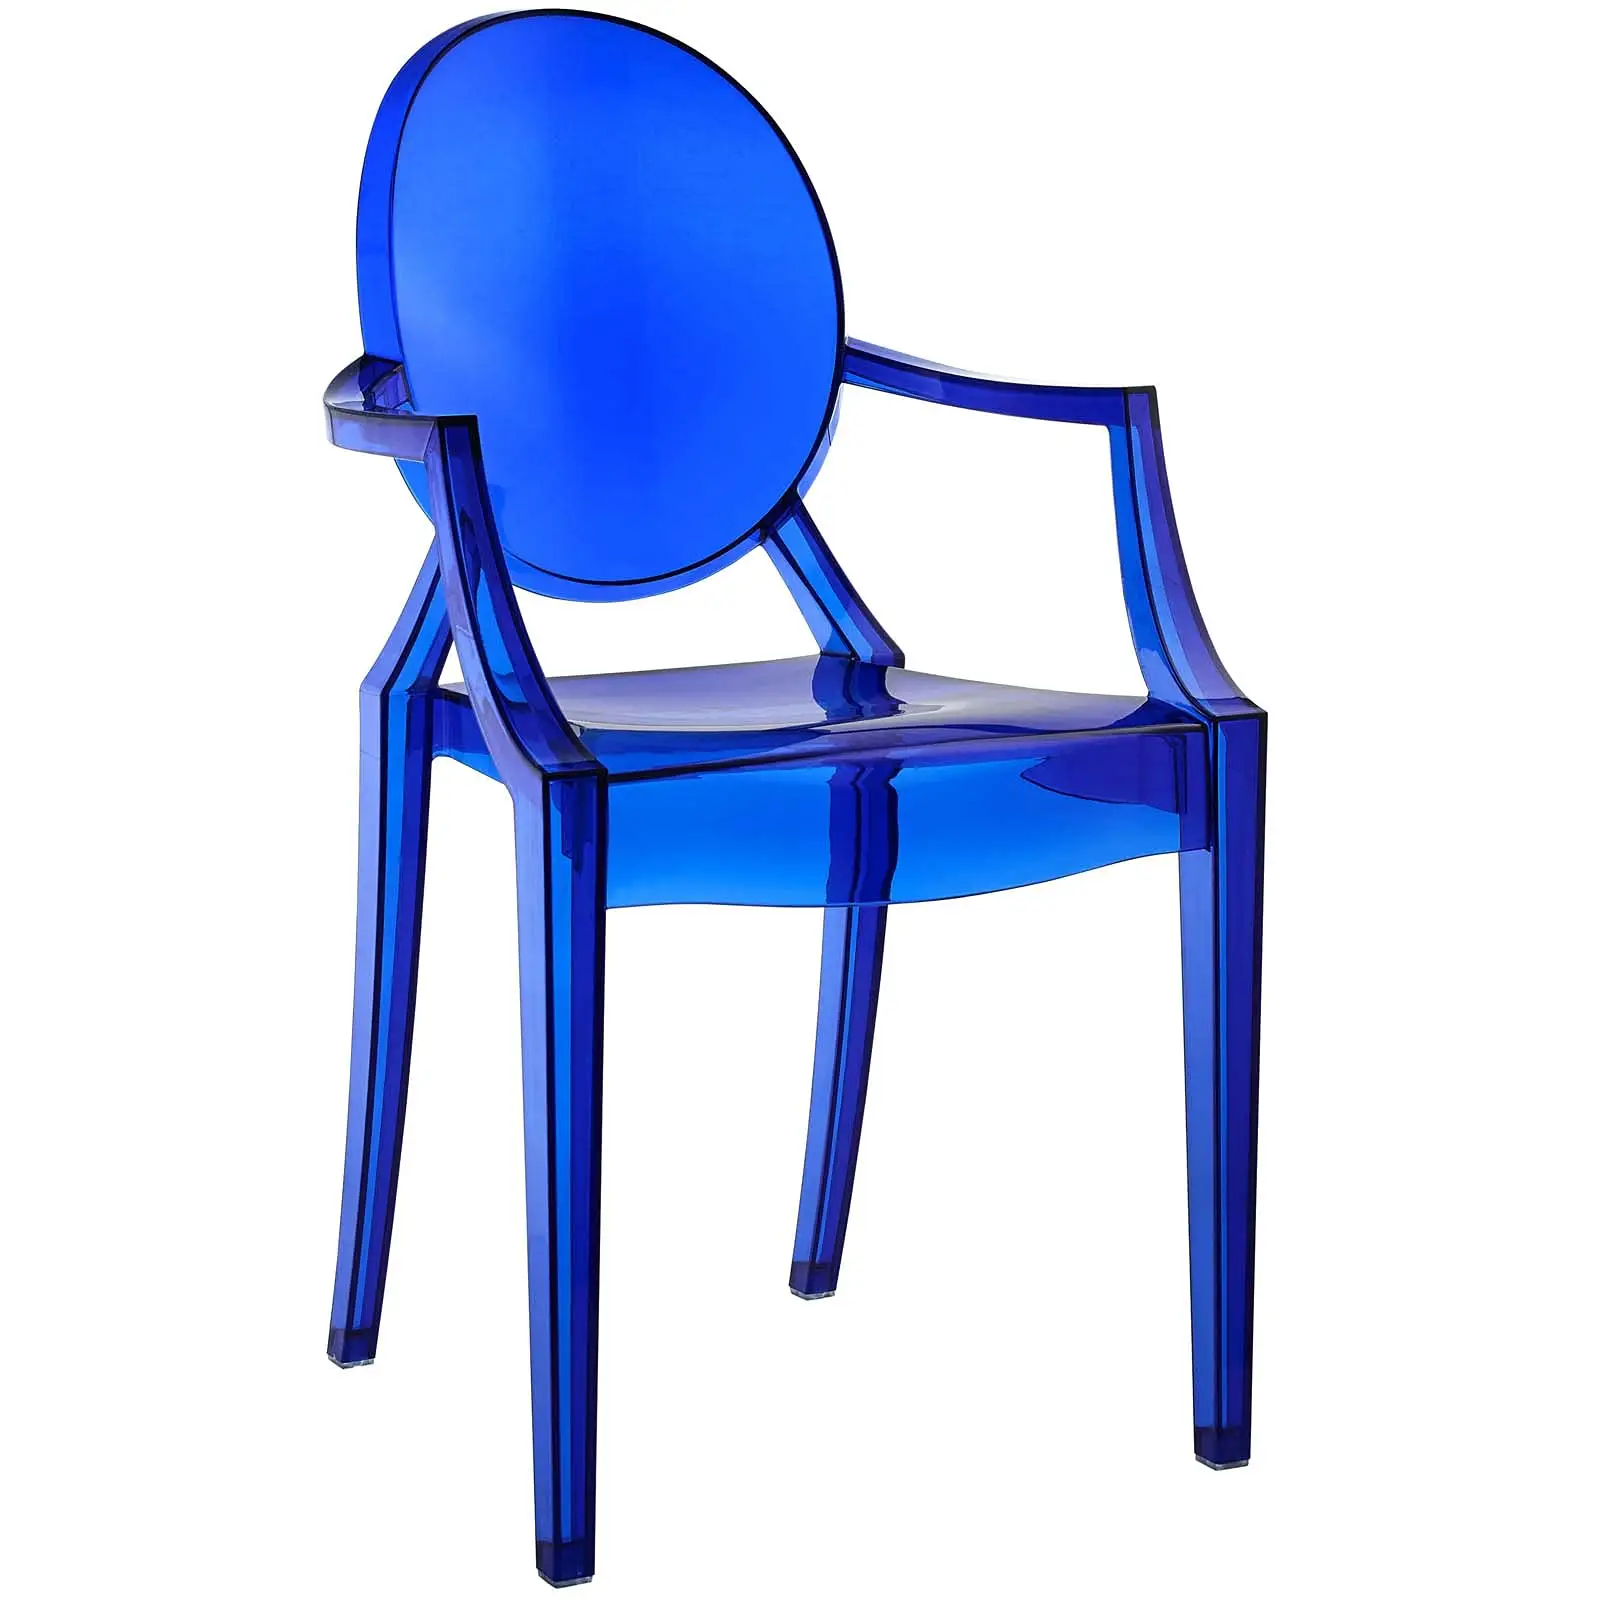 Artworld Displays Chair Acrylic Chavari Banquet Napoleon Dinner Metal Steel Rental Chiavari Chairs For Wedding